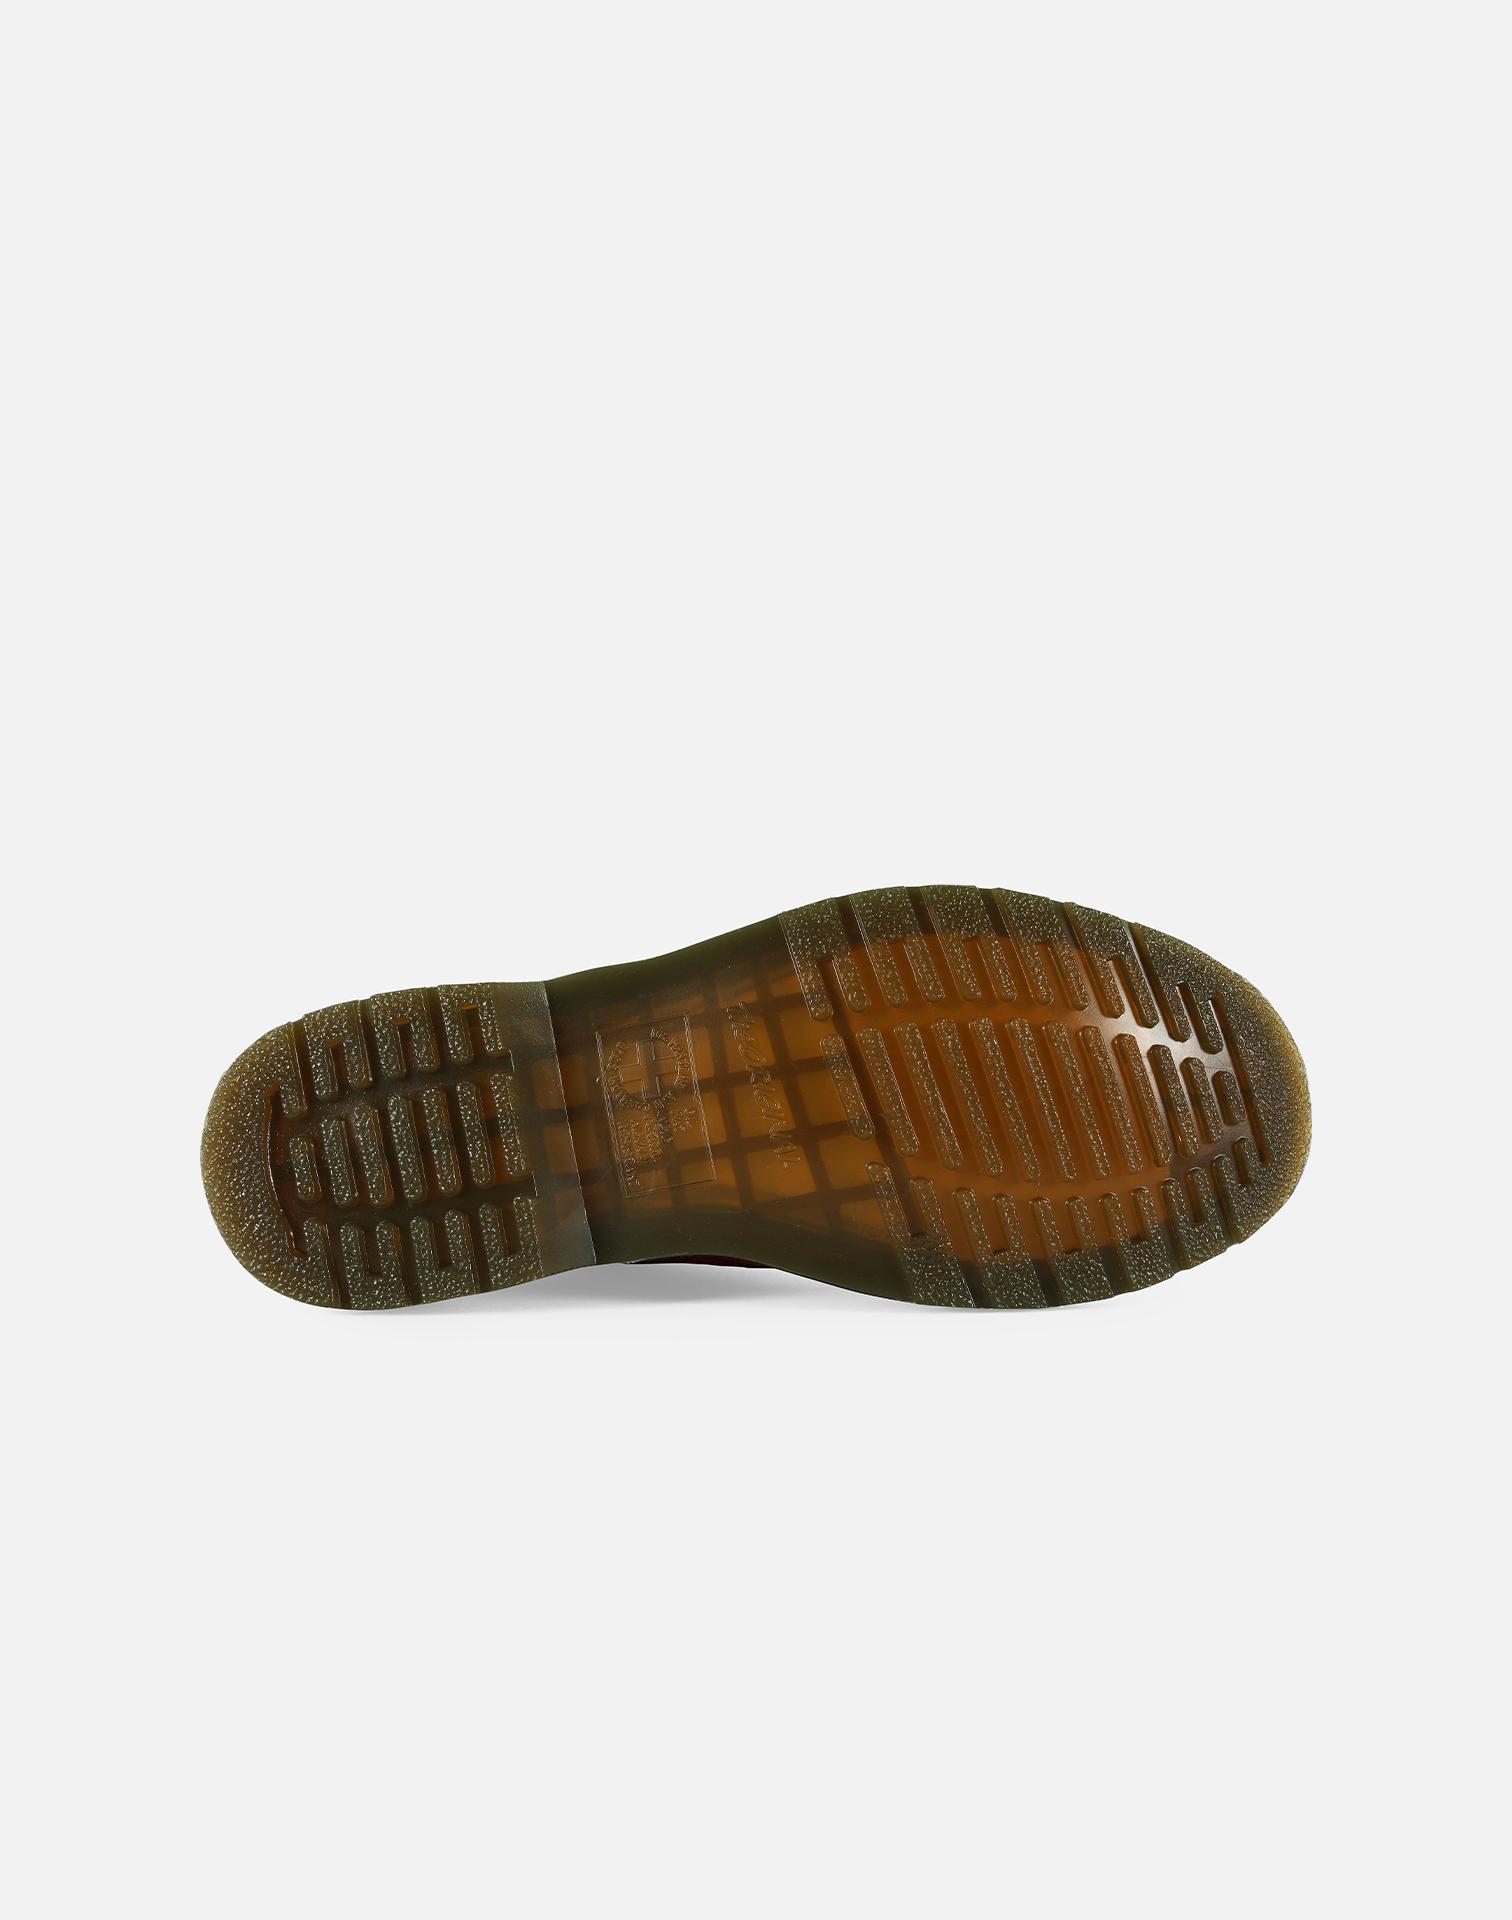 Caleb02 Lace Up Sneaker w Rubber Texture Ridges Thick Platform Sole